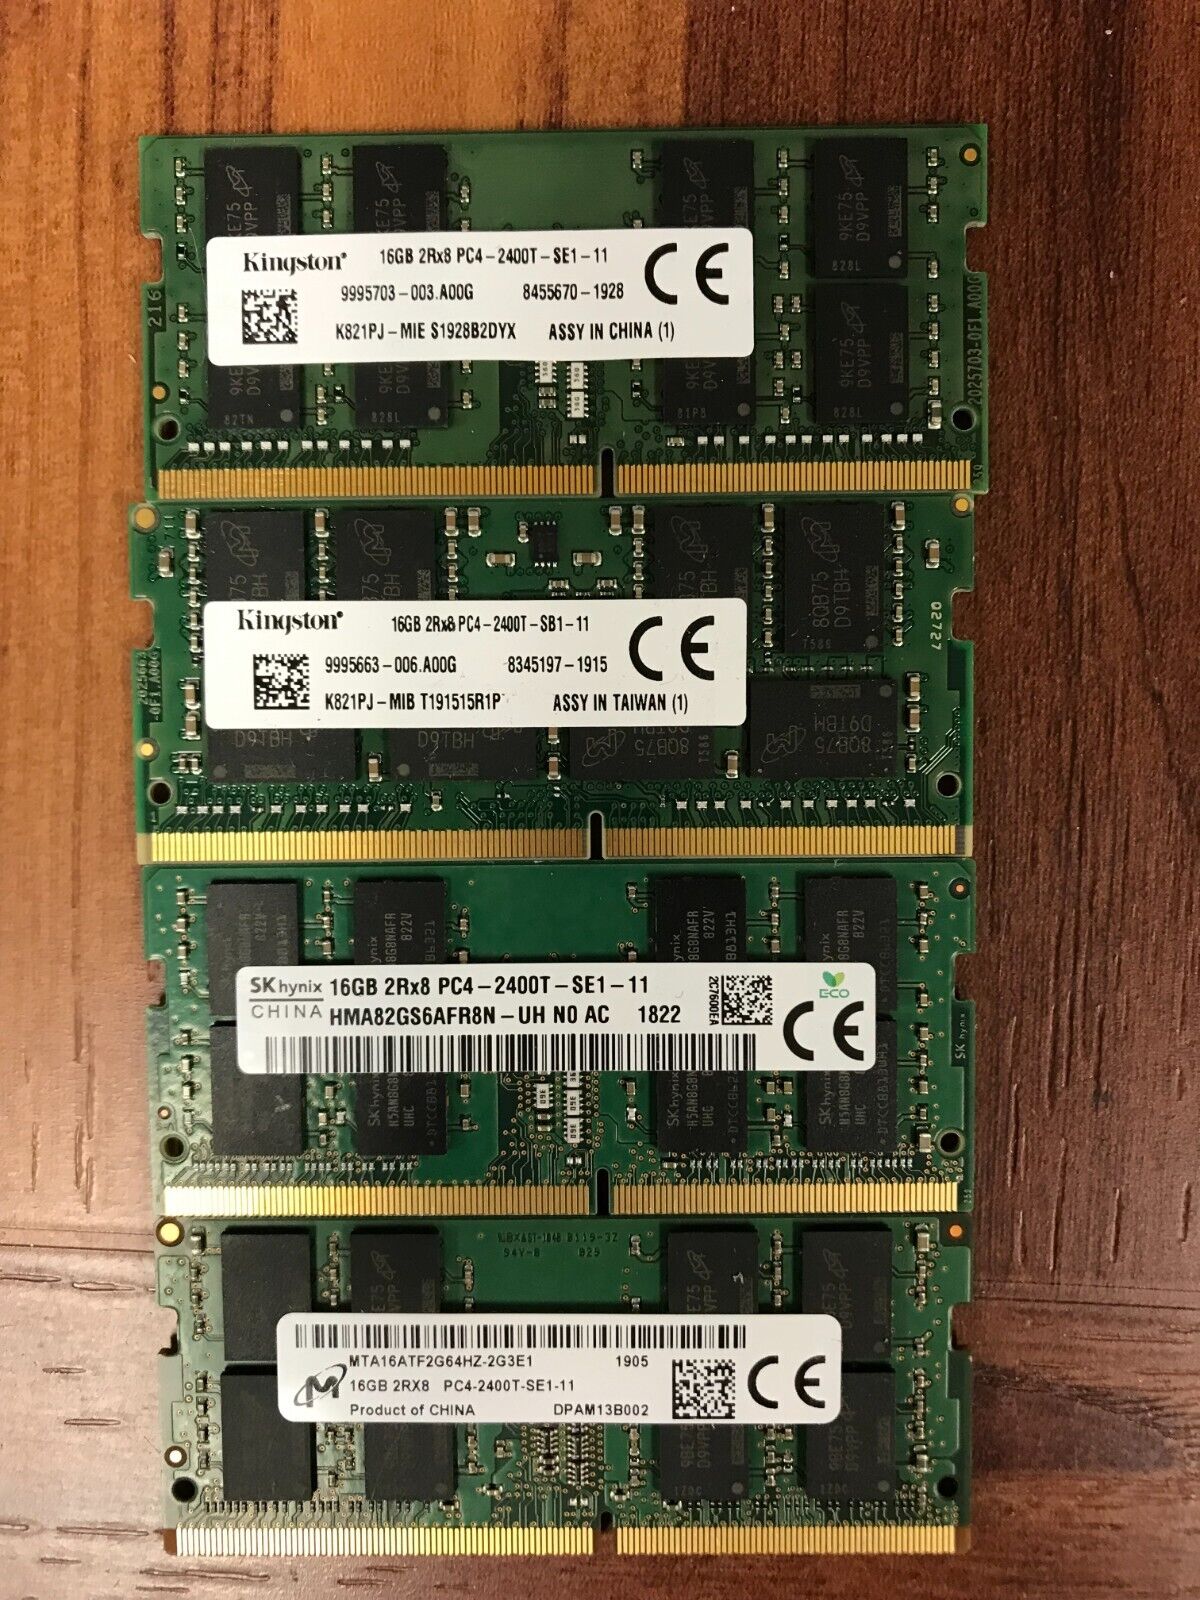 QTY 4 - TESTED WORKING DDR4 16GB (1 x 16GB) DDR4-2666 Laptop Memory SODIMM hva